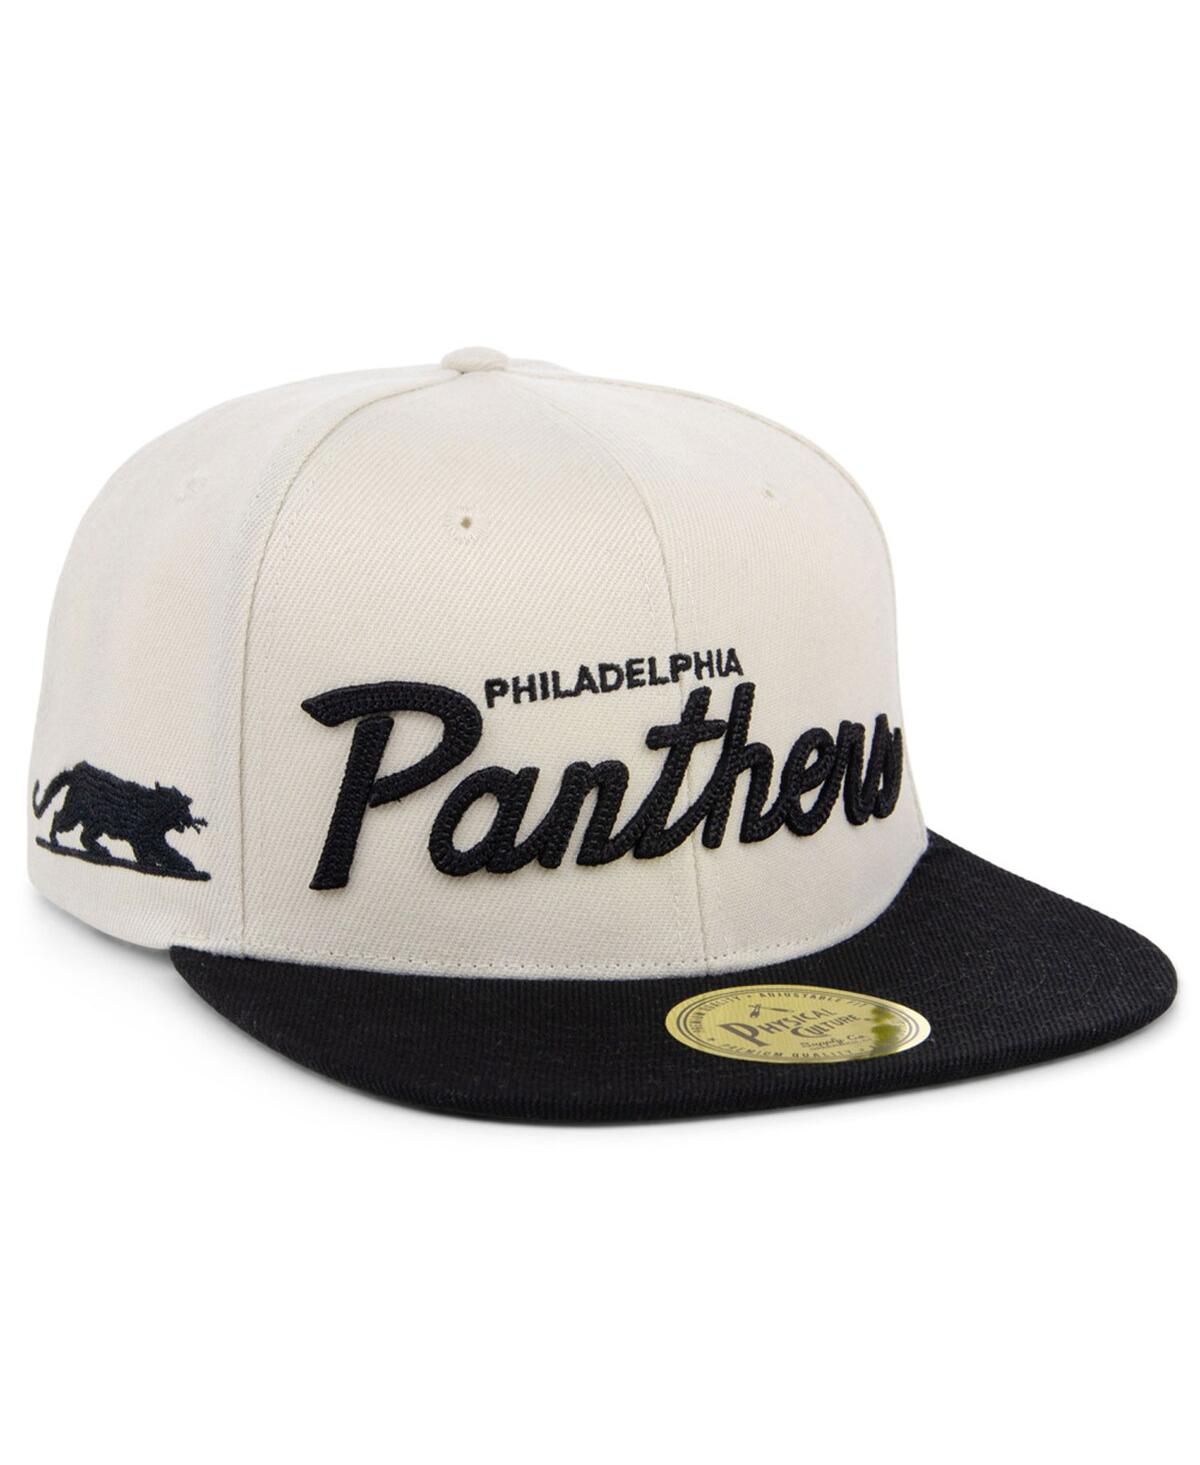 Shop Physical Culture Men's  Cream Philadelphia Panthers Black Fives Snapback Adjustable Hat